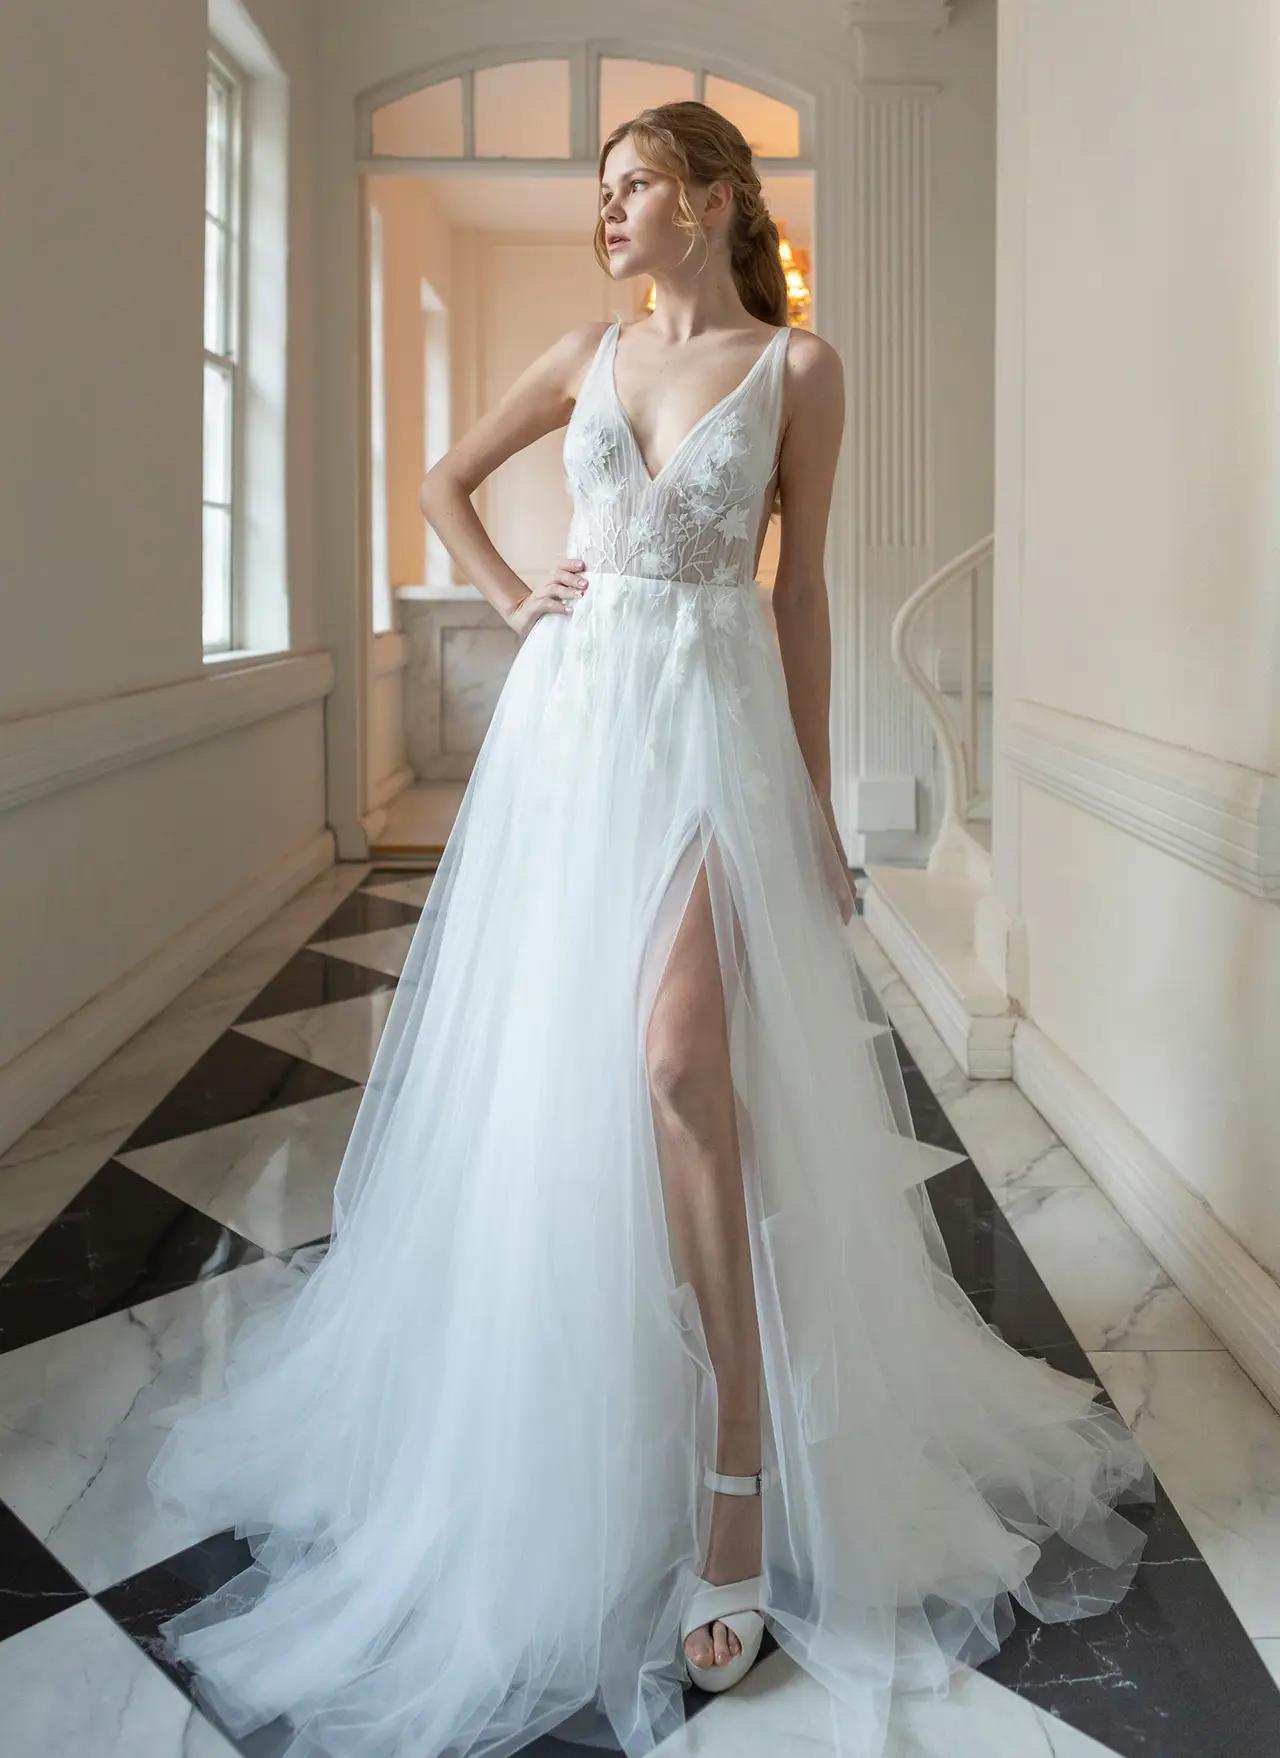 Morgan Davies Bridal model wearing a dress designed by Gozde Karadana